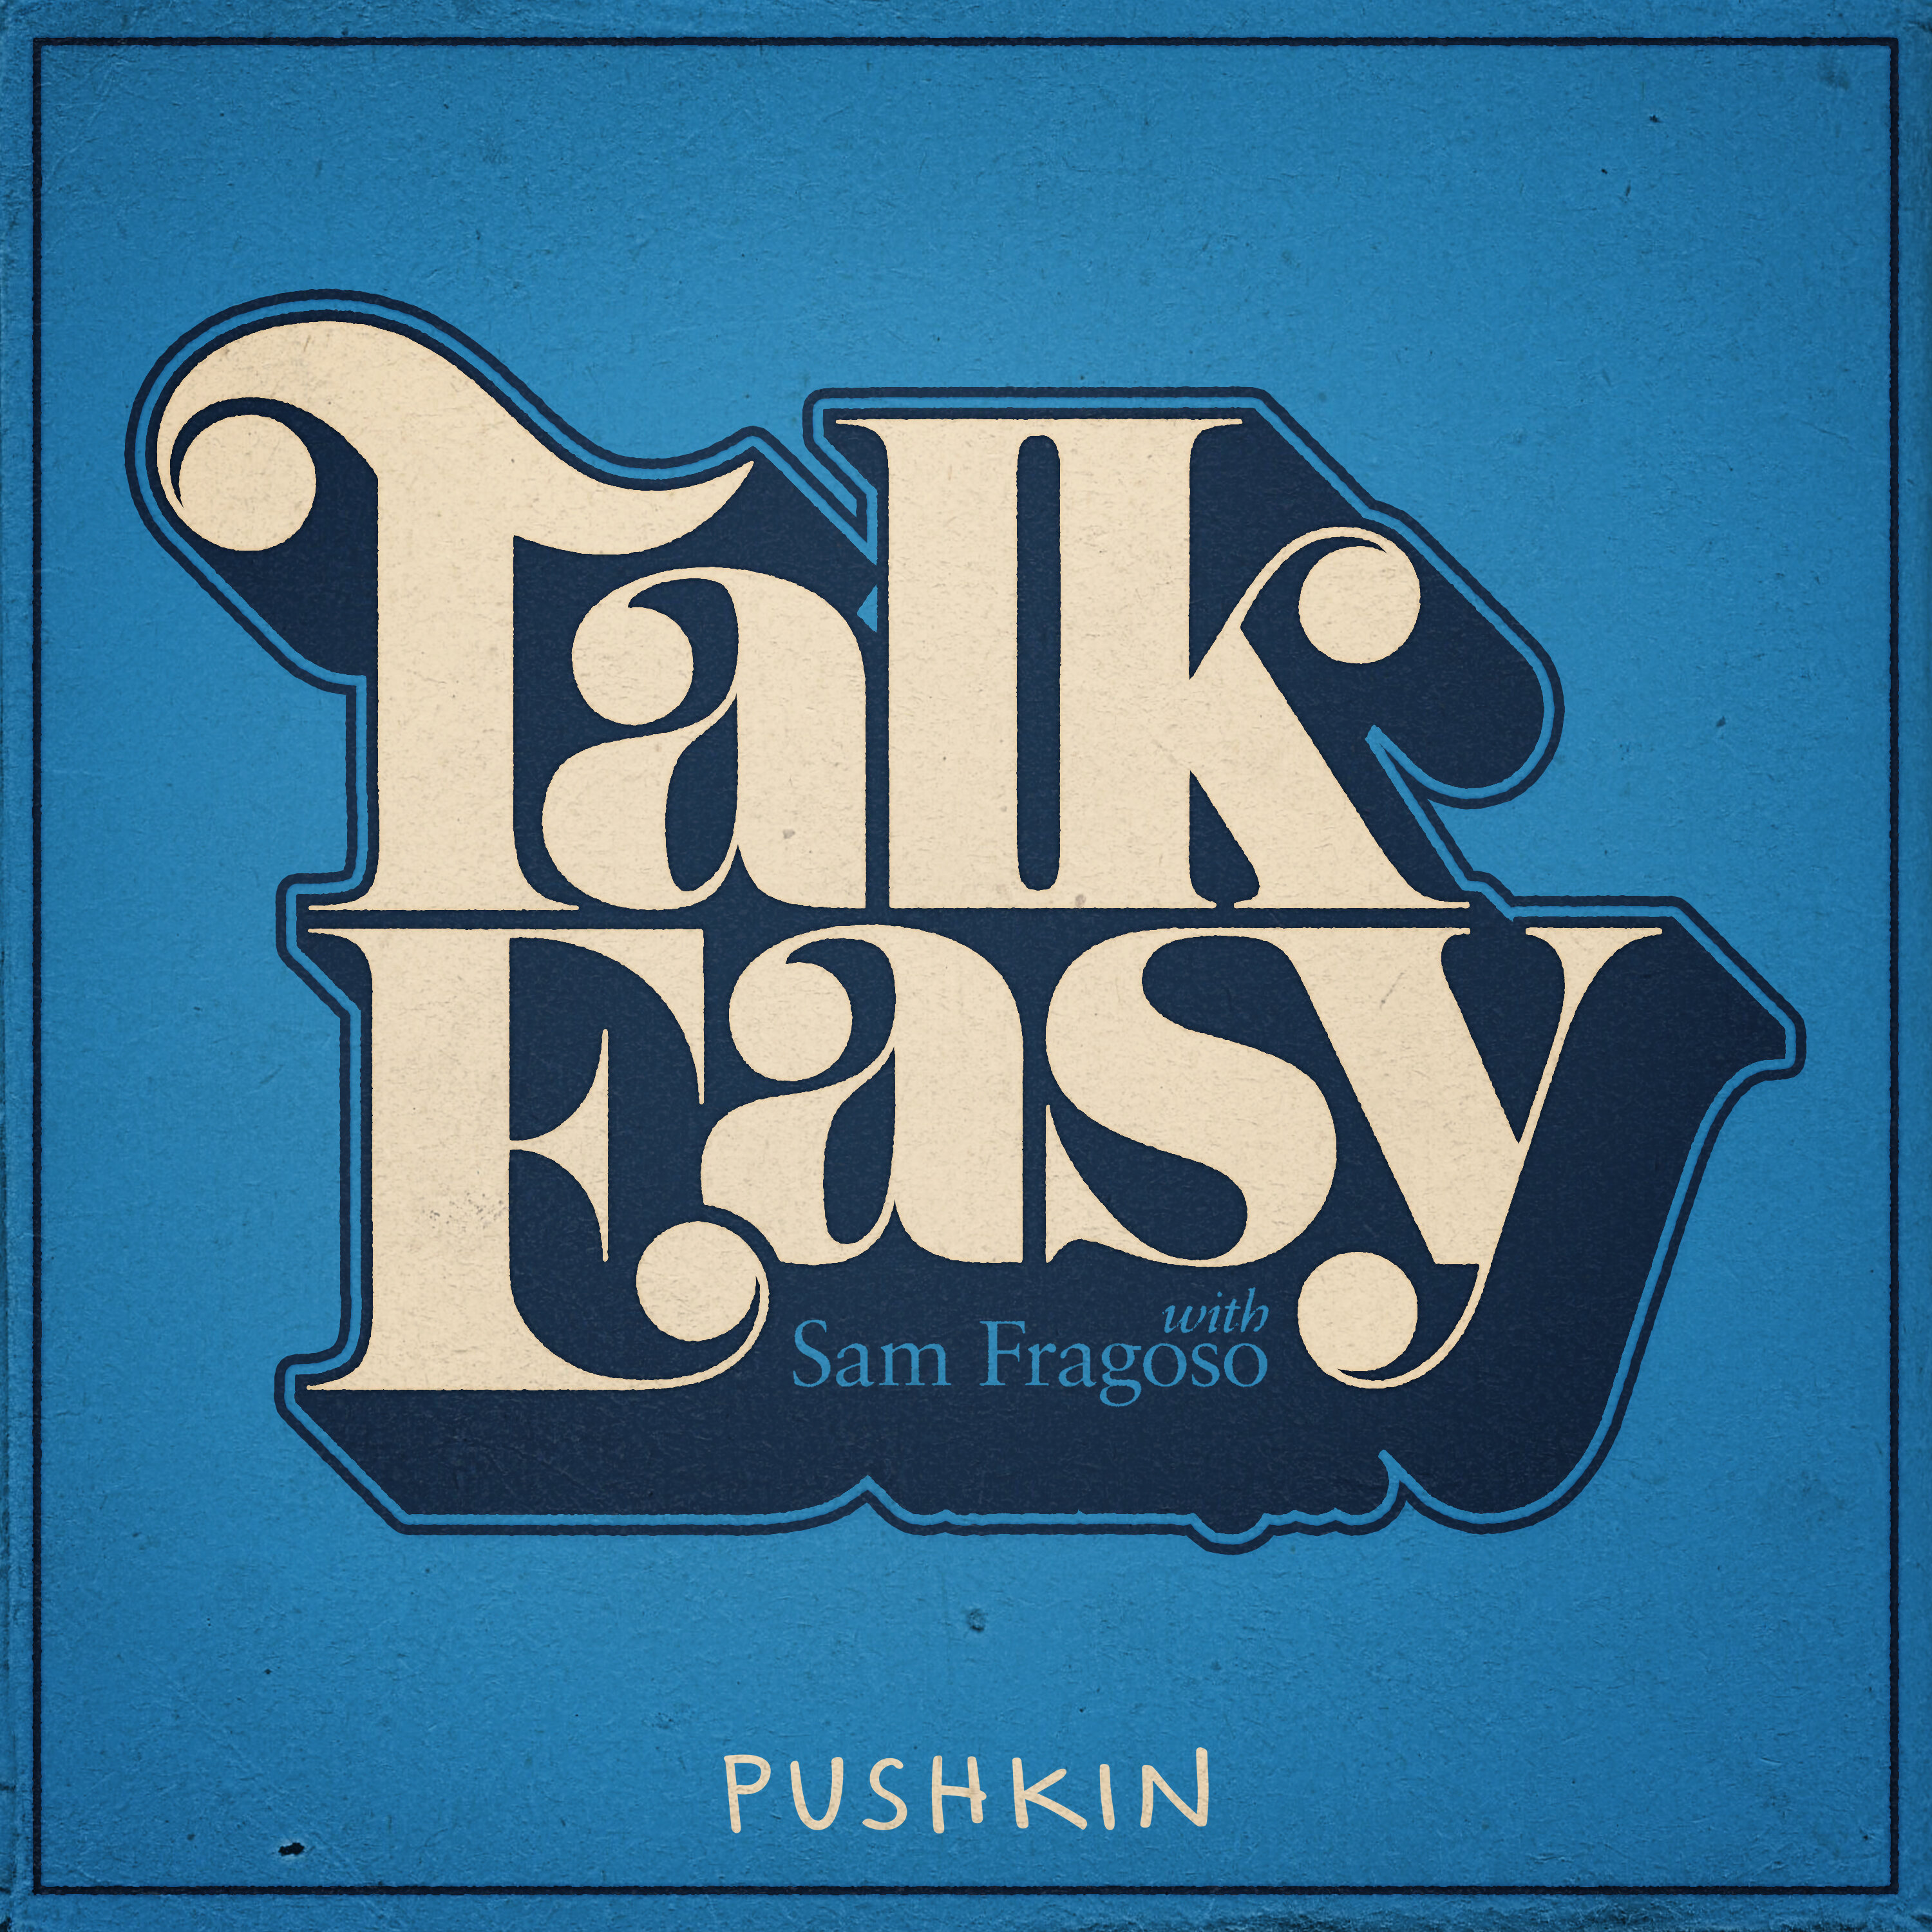 Talk Easy with Sam Fragoso podcast show image